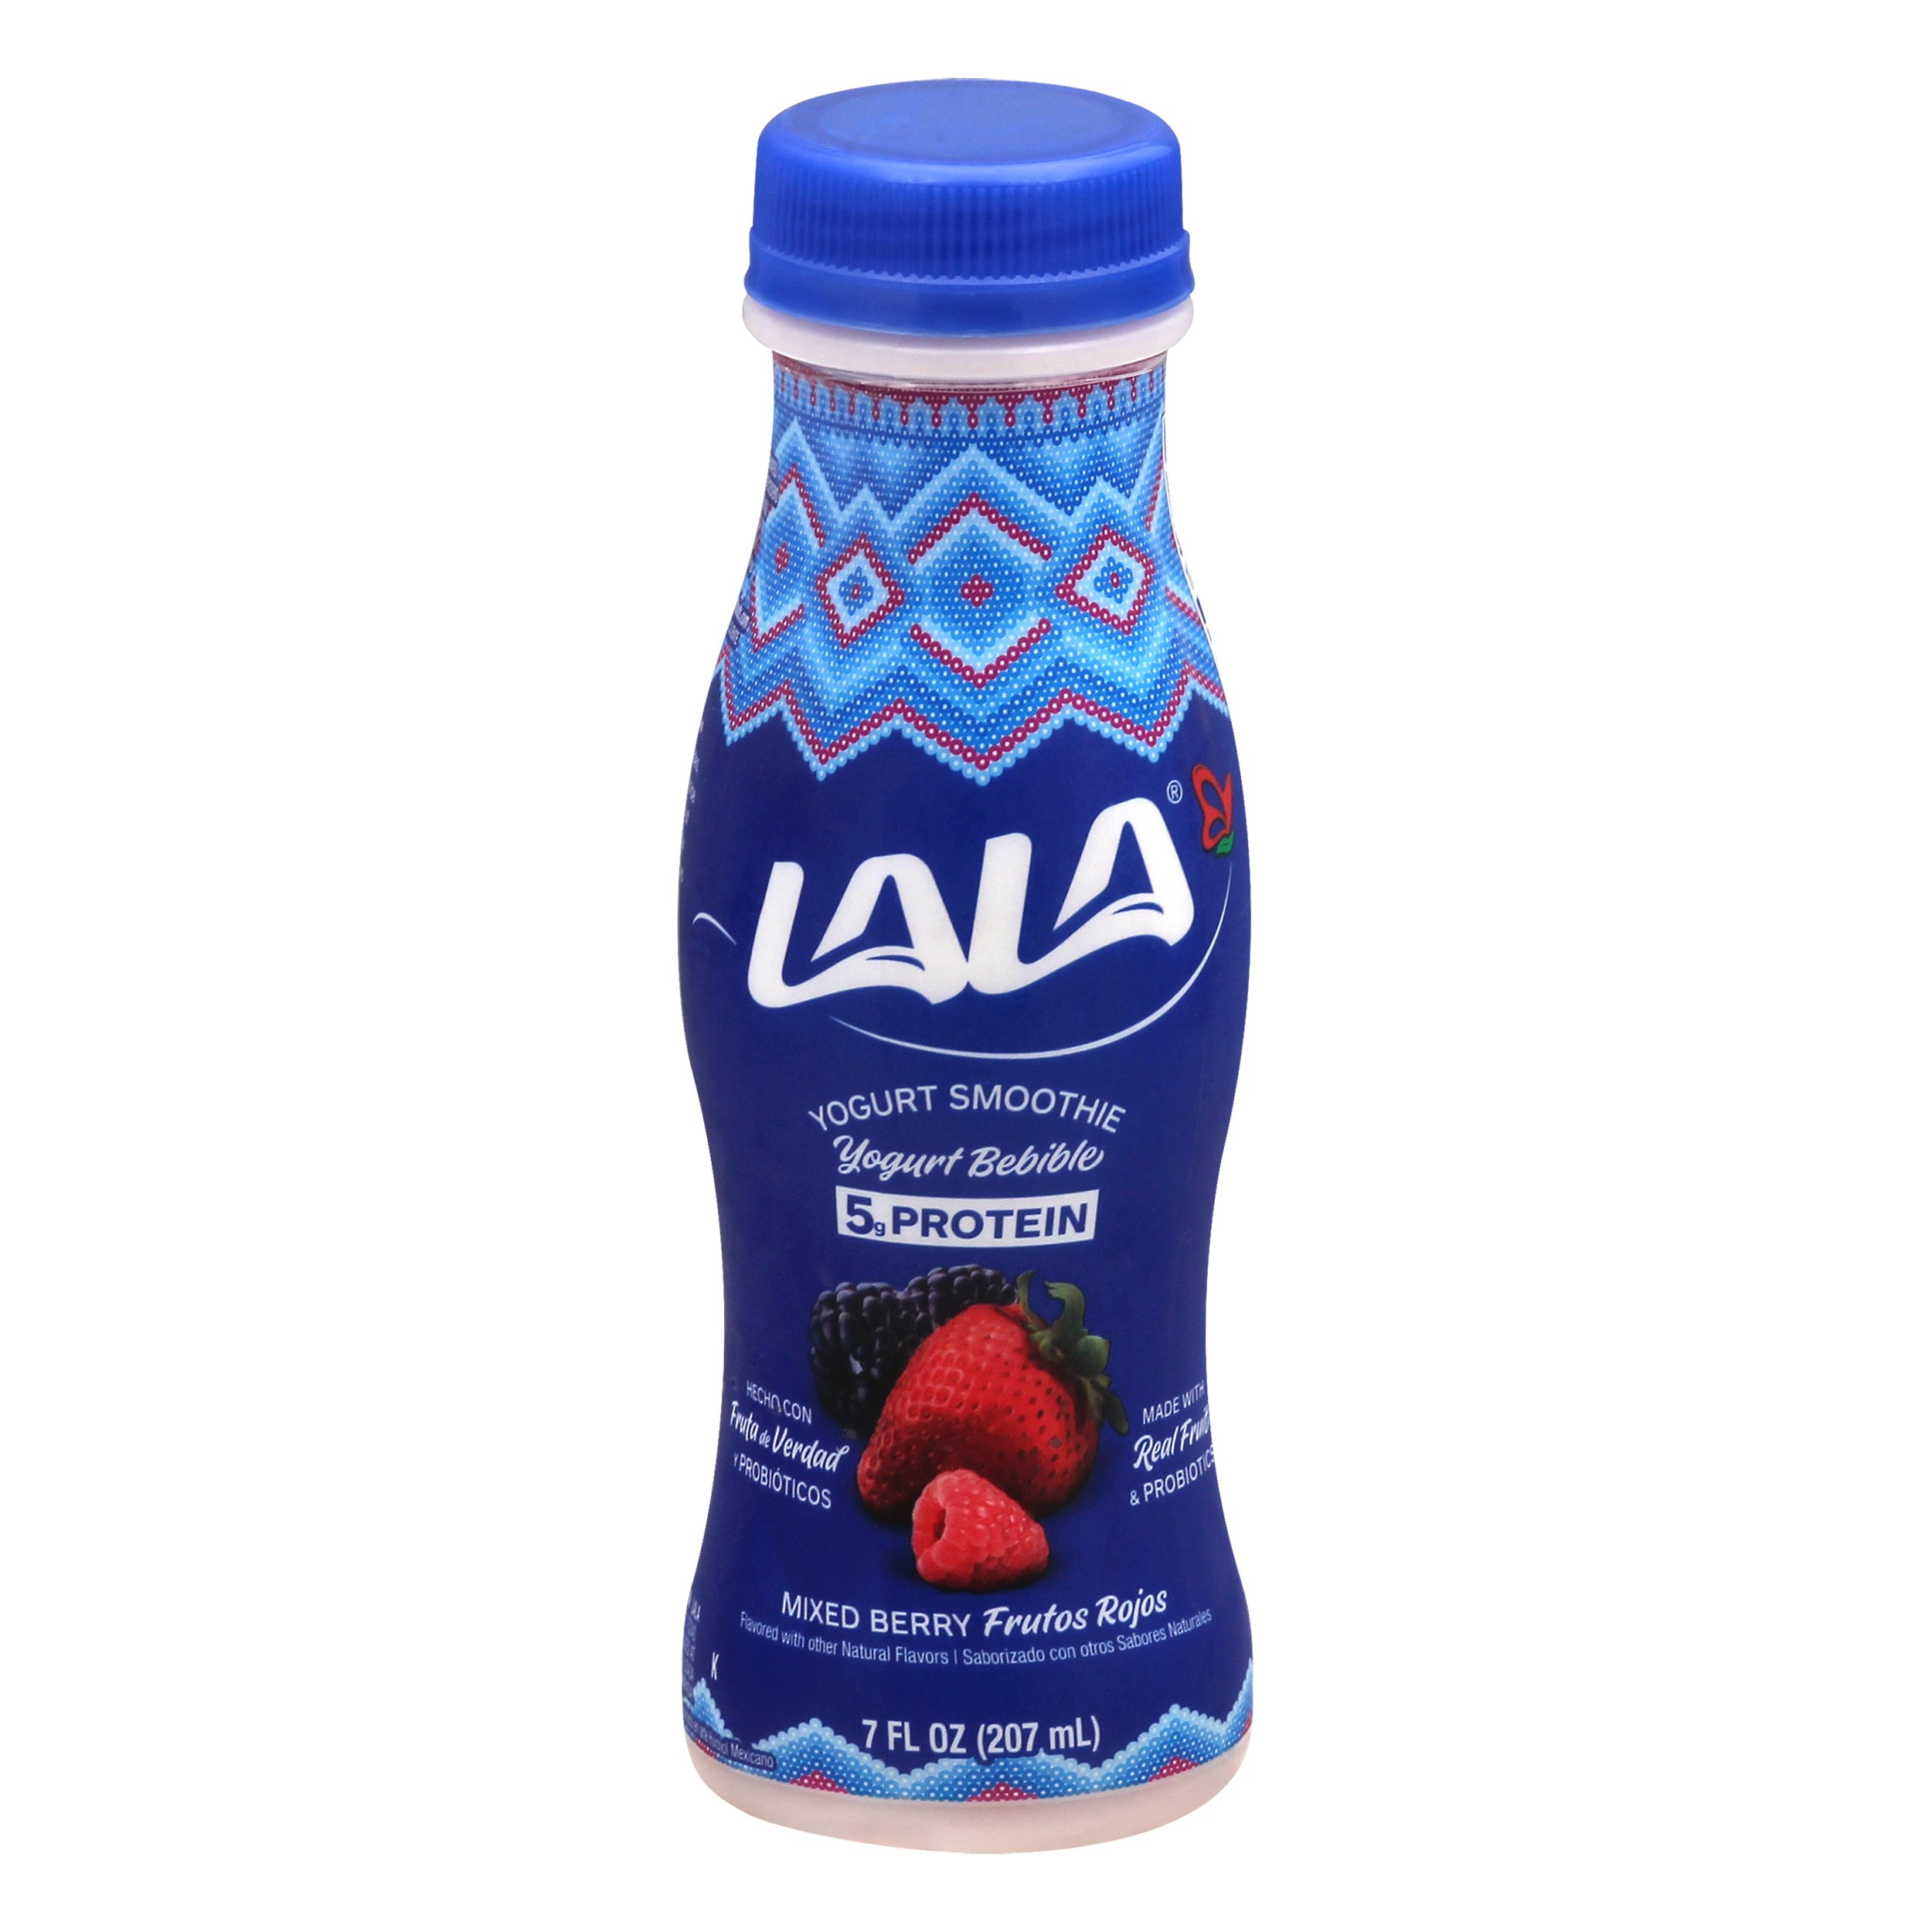 LALA Drinkable Yogurt Smoothie with Probiotics, 5g of ...